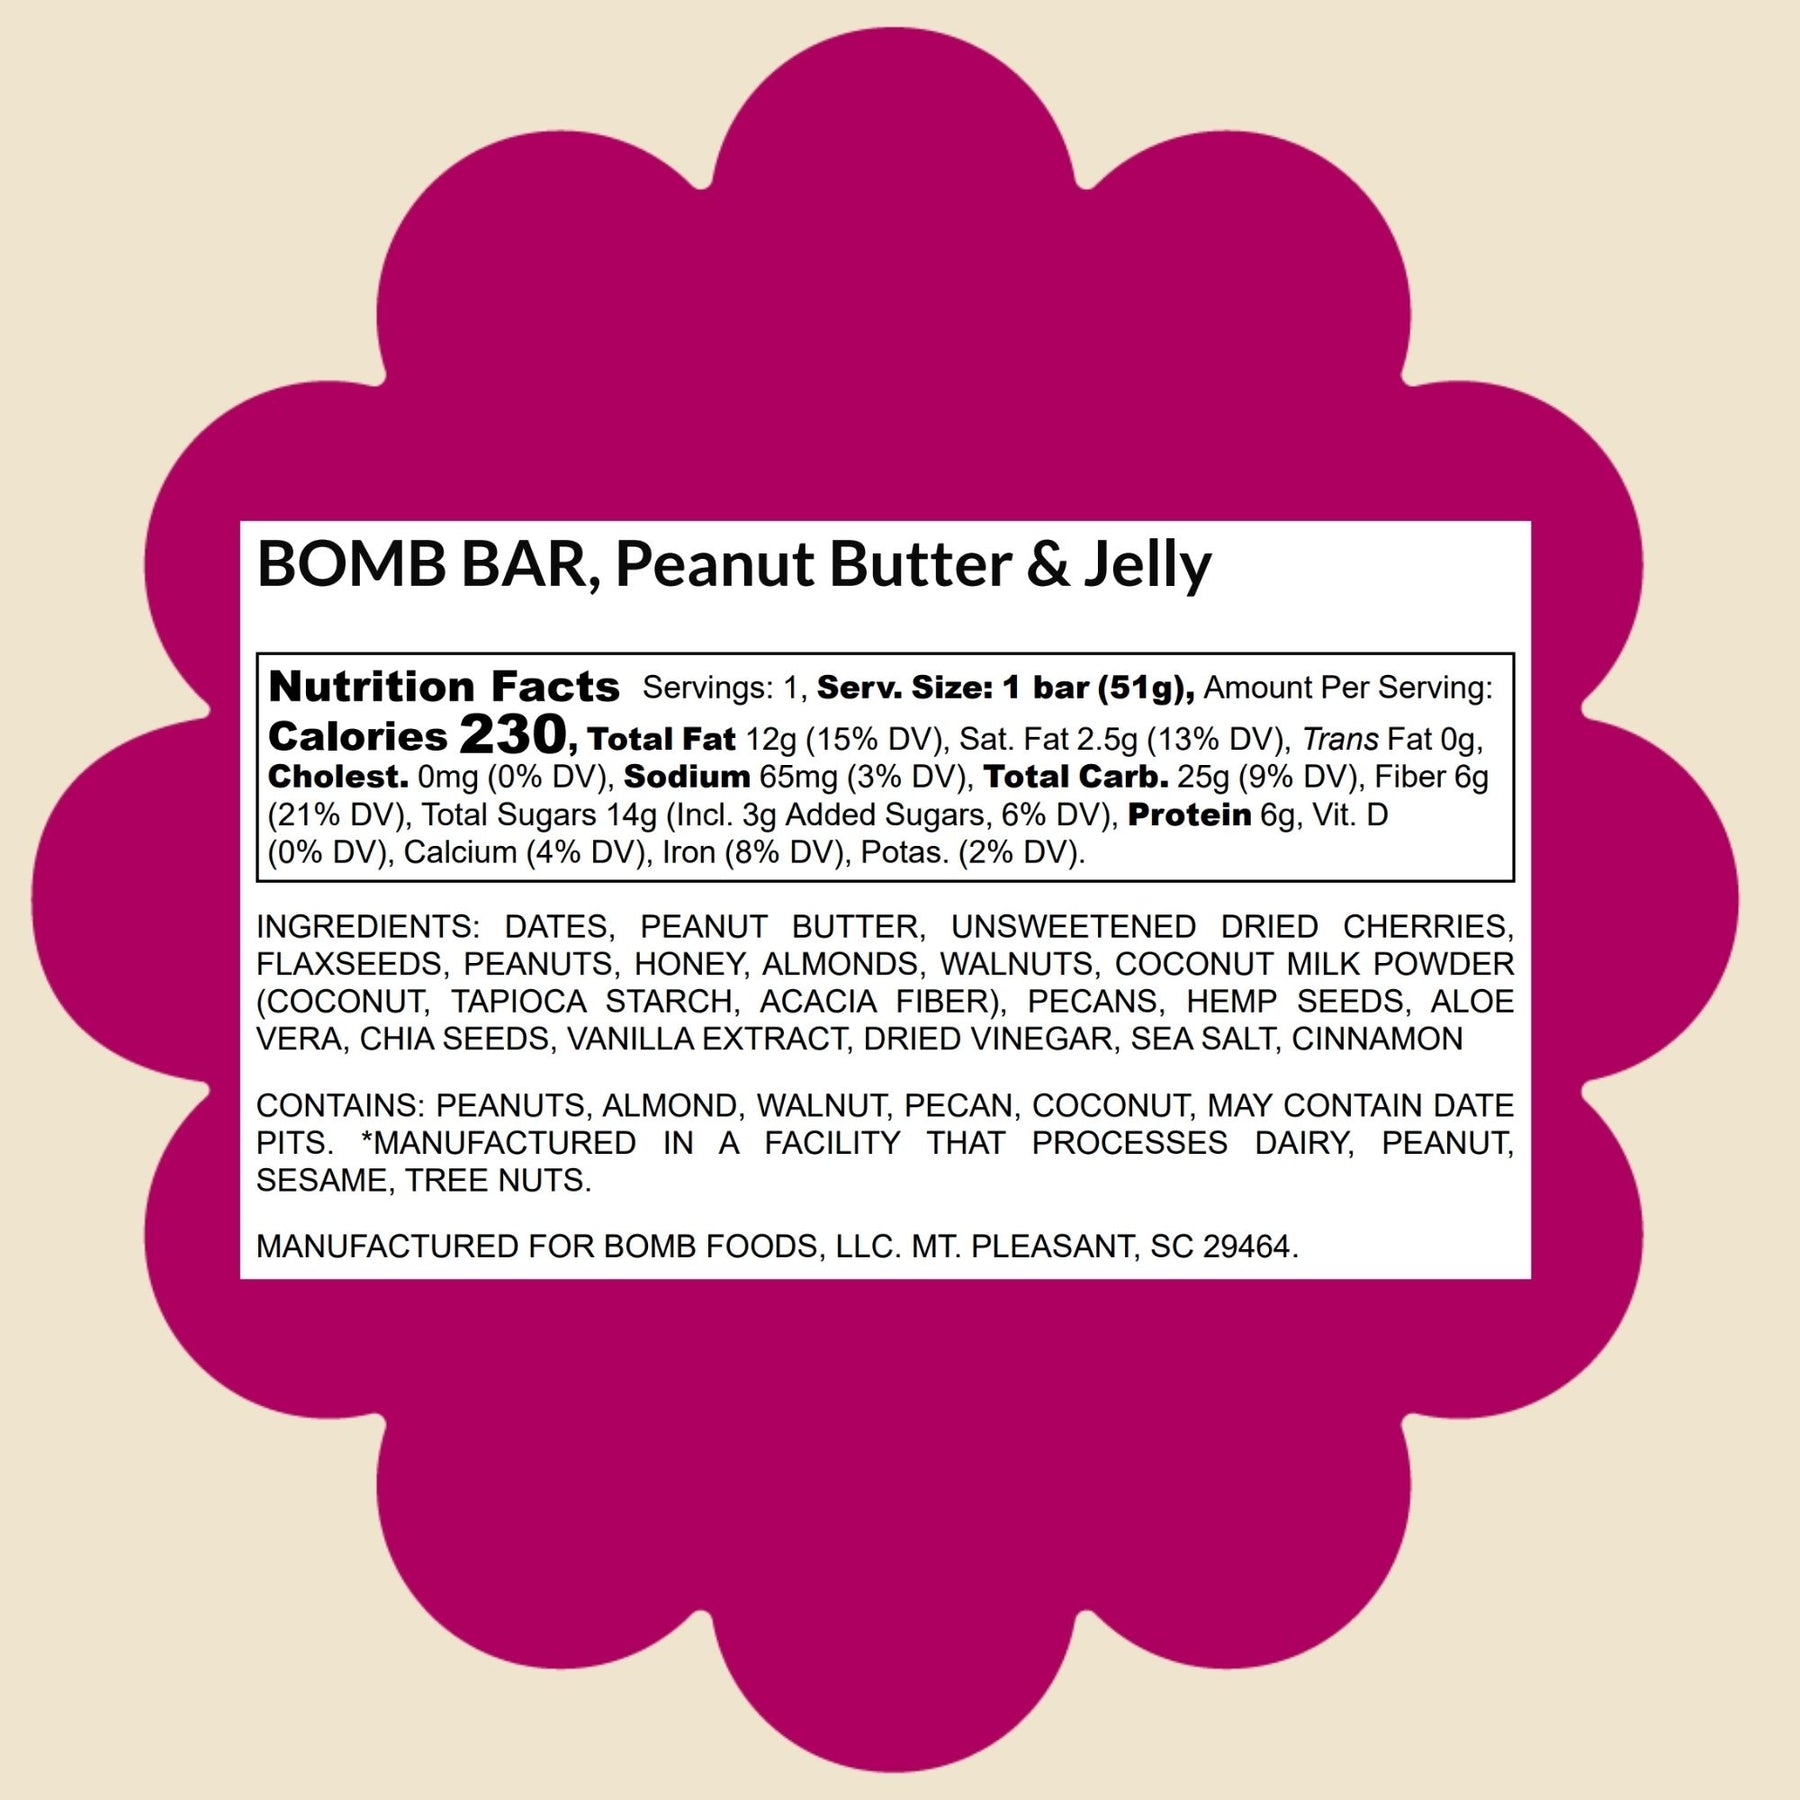 Peanut Butter & Jelly Bomb Bar